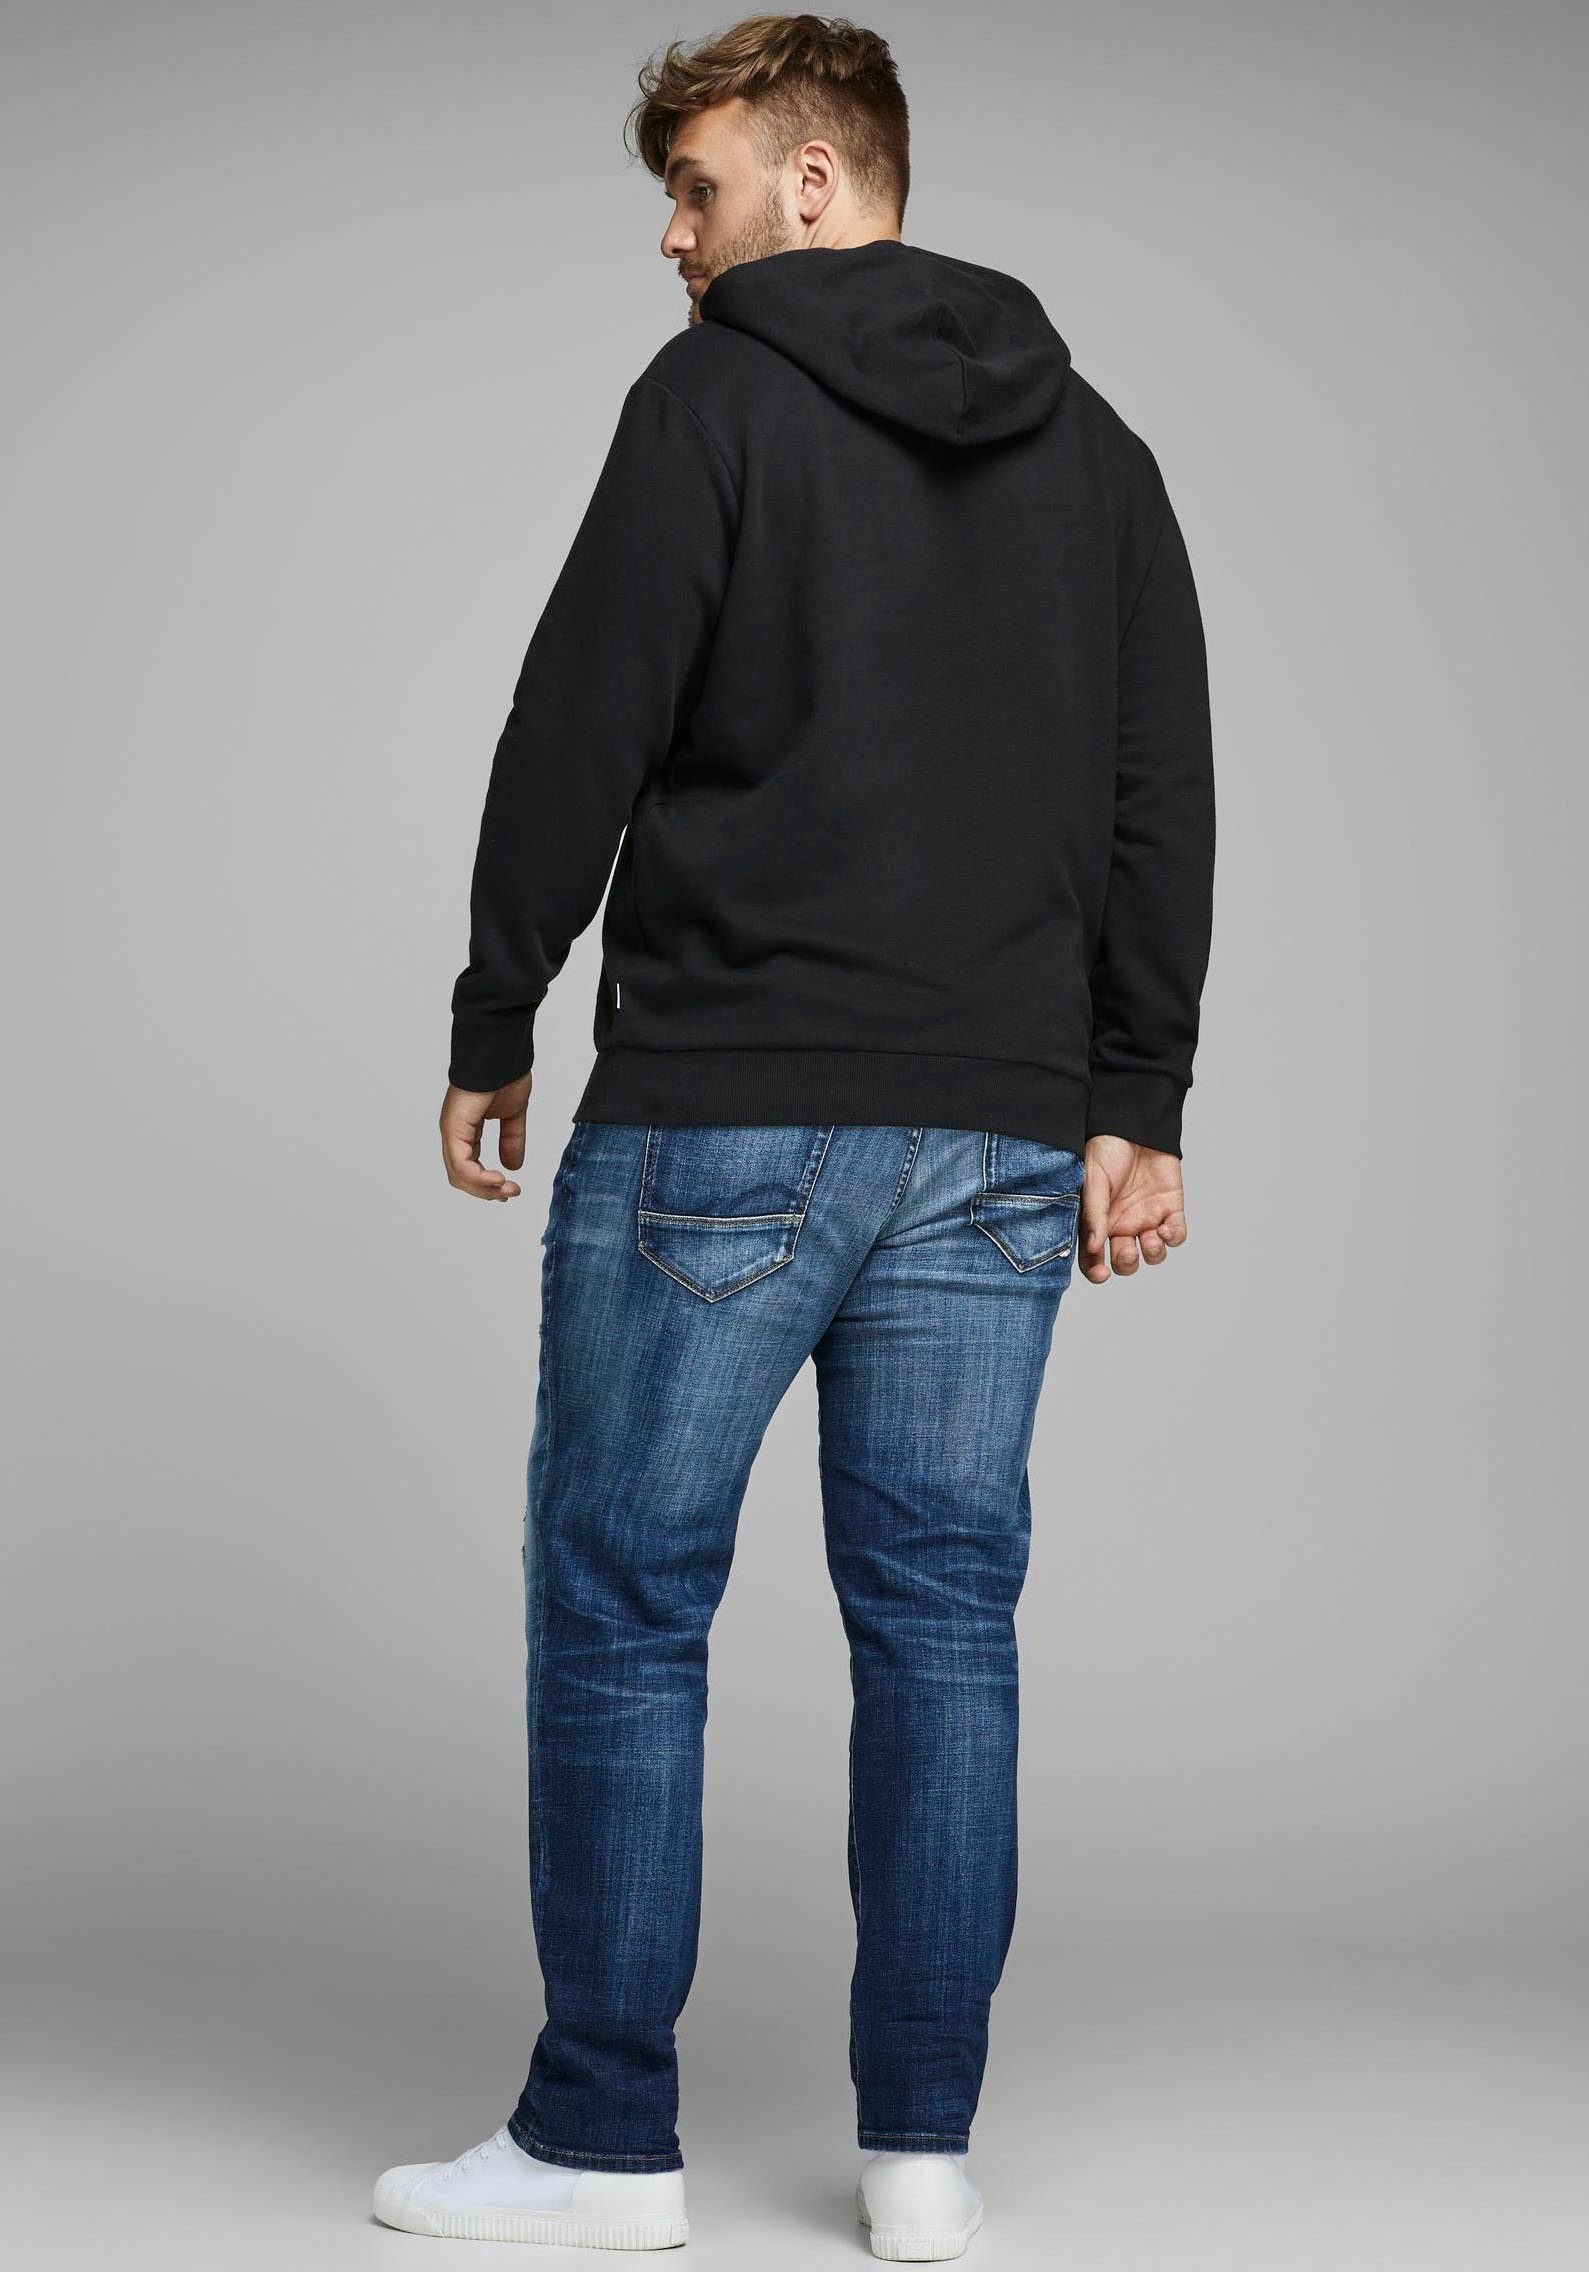 Jack & Bis PlusSize CORP Größe 6XL LOGO Kapuzensweatshirt Jones schwarz SWEAT HOOD